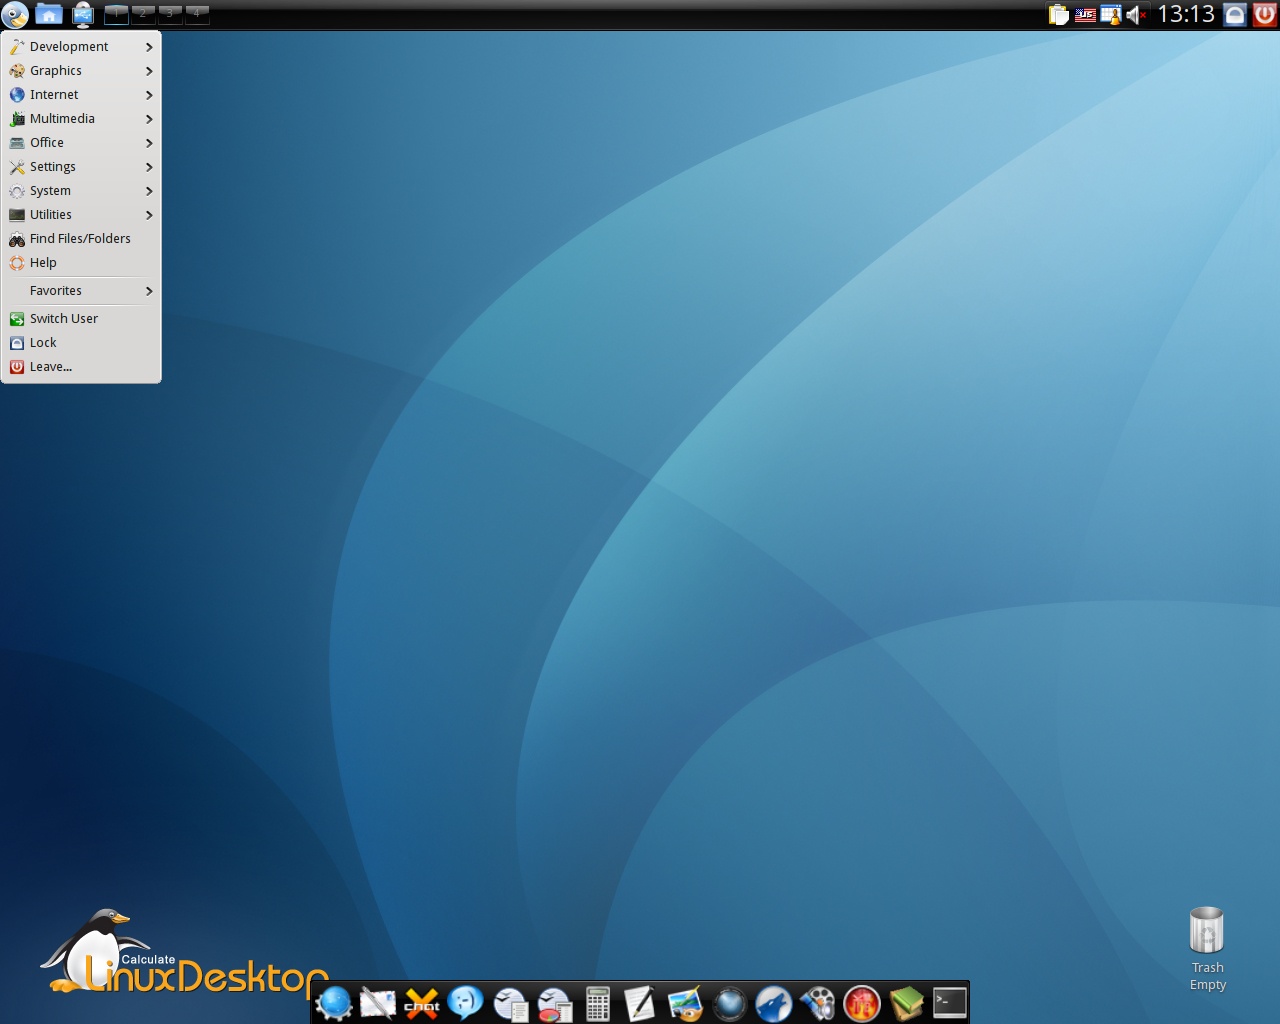 Calculate Linux Desktop